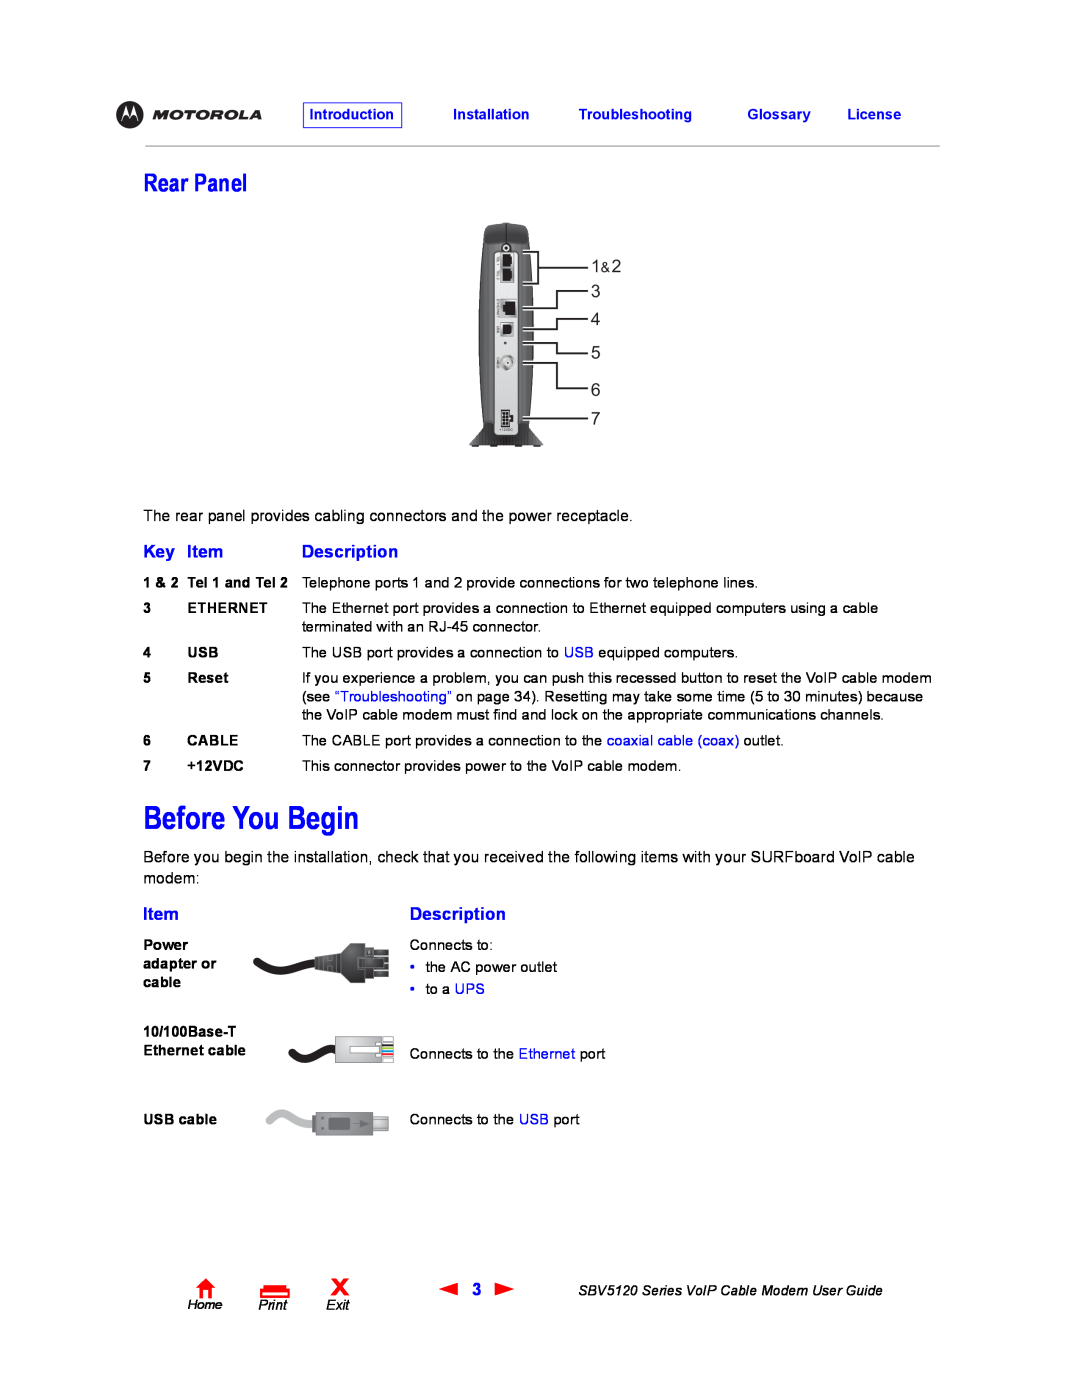 Motorola SBV5120 manual Before You Begin, Rear Panel, Key Item, Description, Introduction, 1 & 2 Tel 1 and Tel 